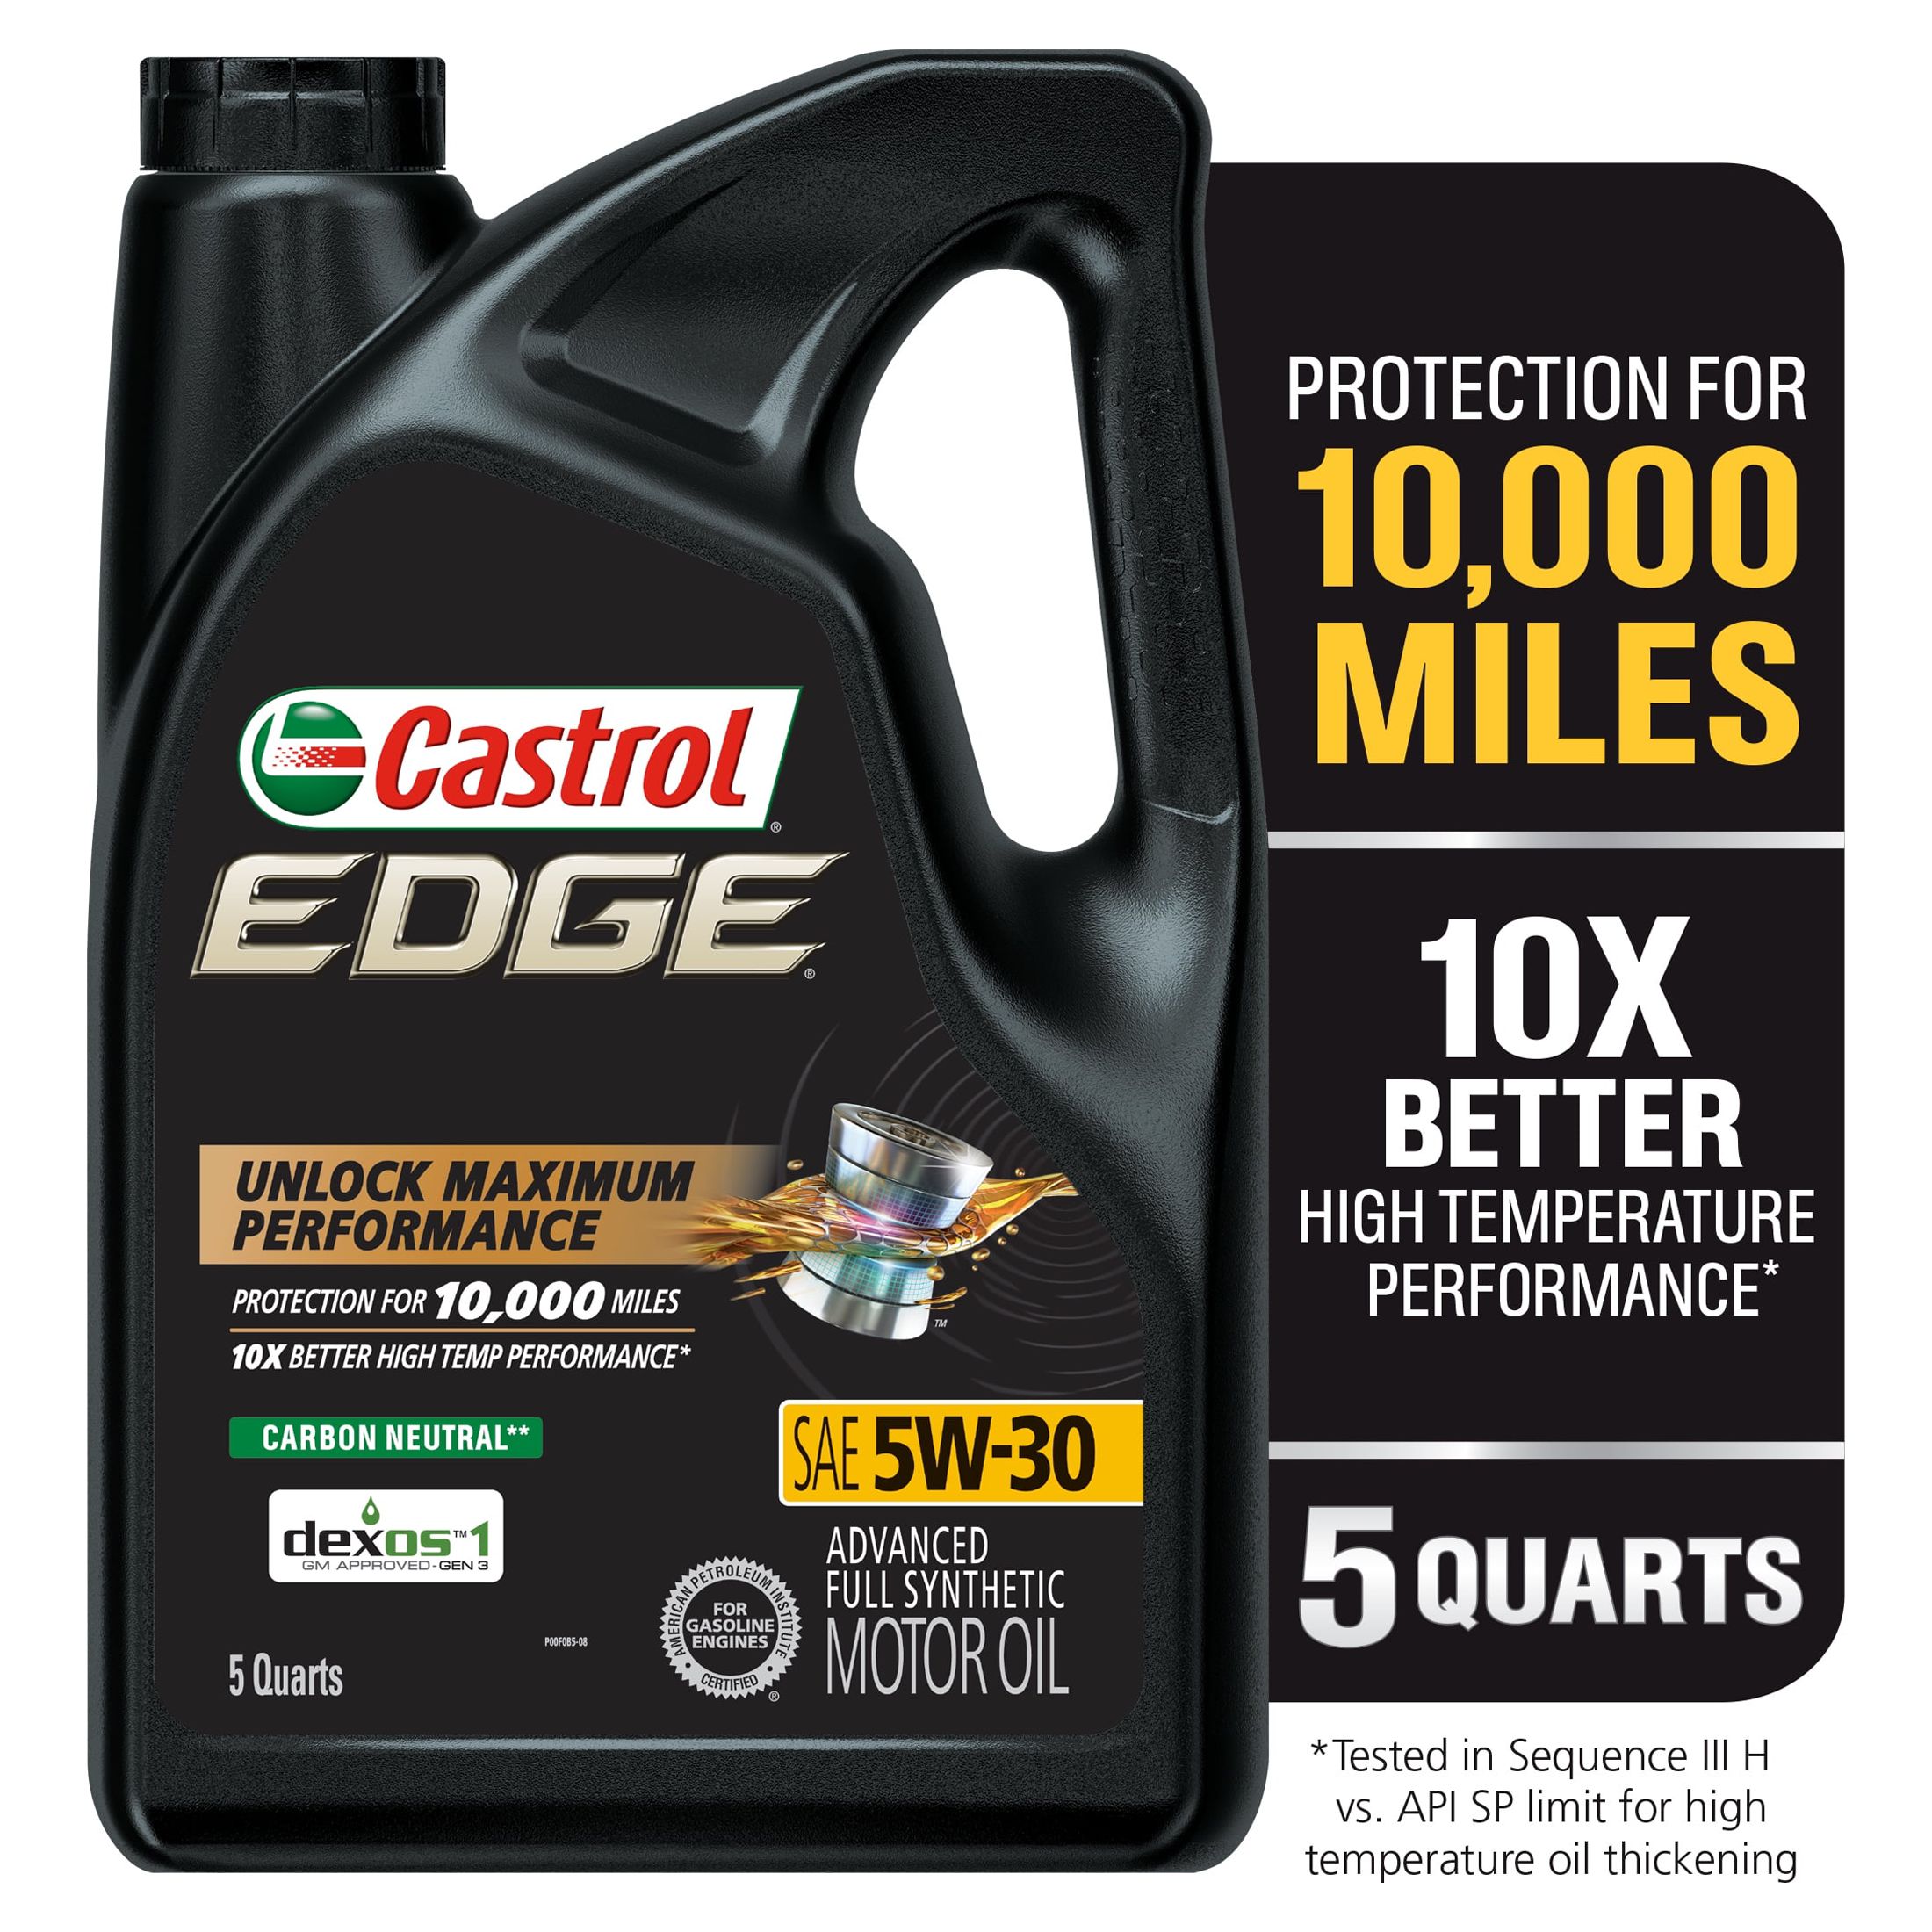 Castrol Edge 5W-30 Advanced Full Synthetic Motor Oil, 5 Quarts - image 1 of 13